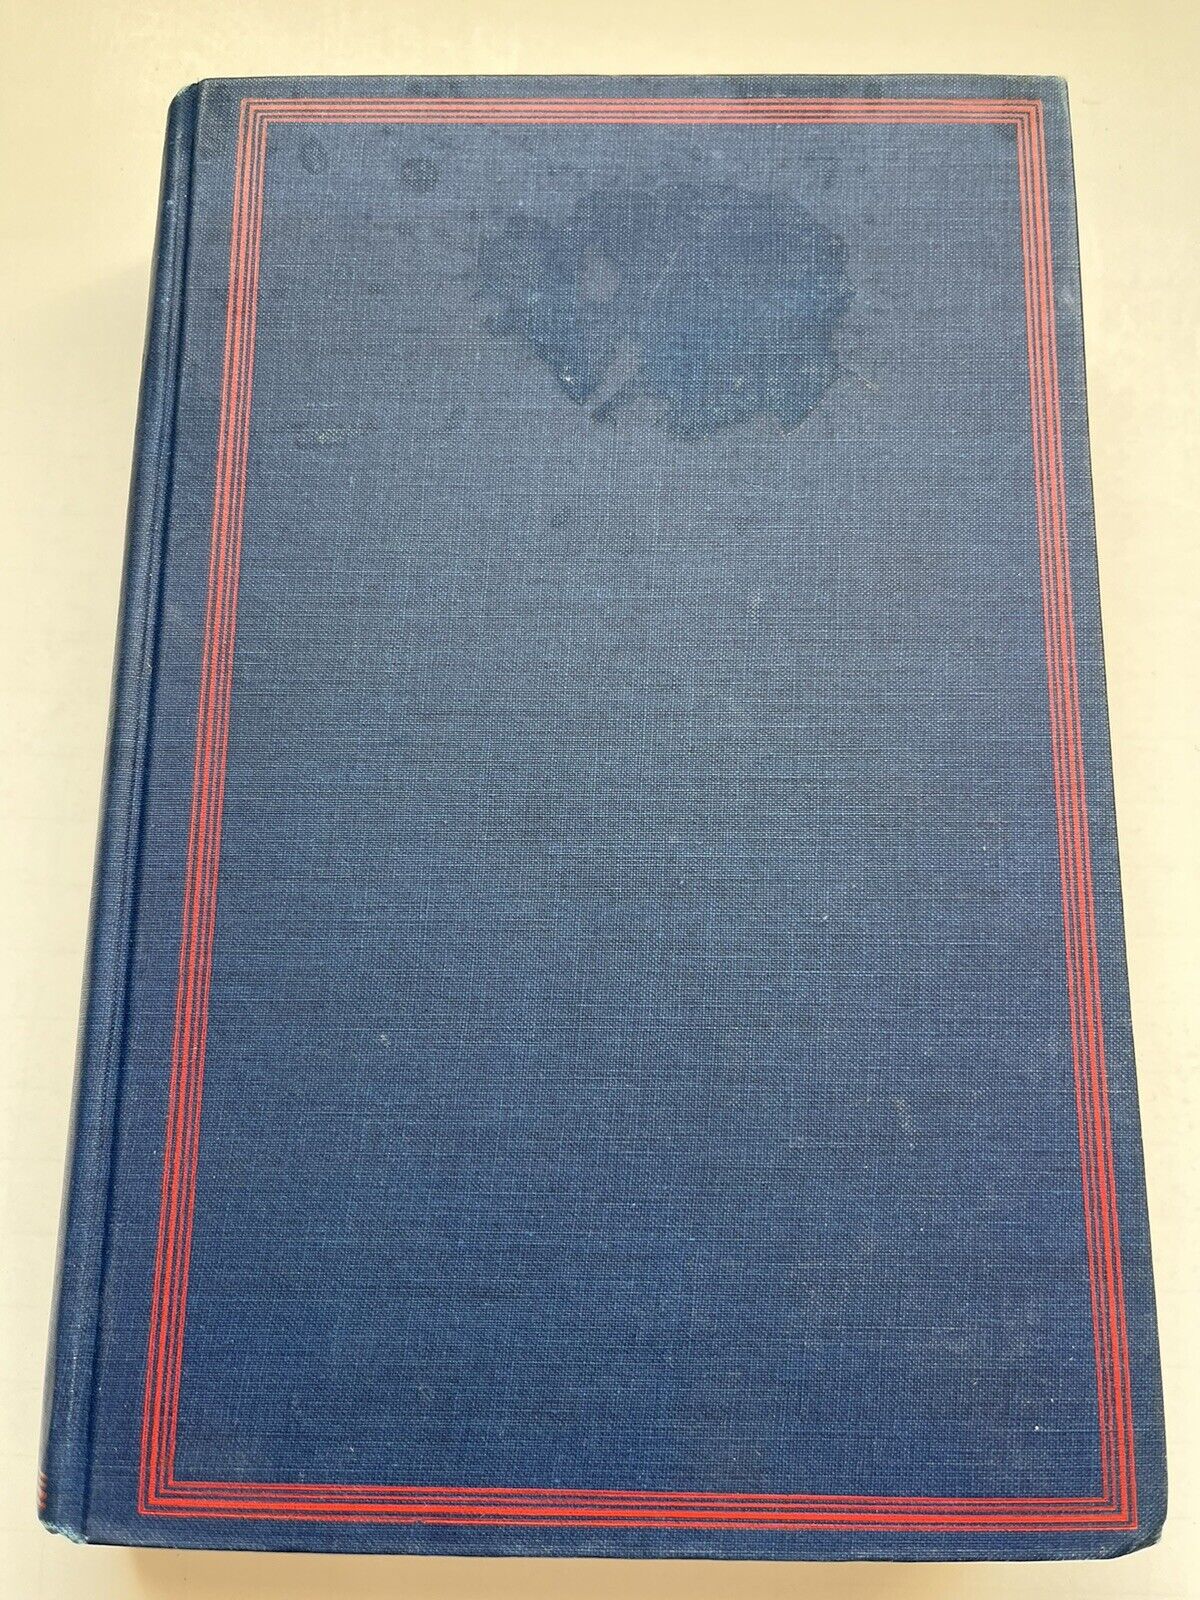 Reveille in Washington 1860-1865 by Margaret Leech, Vintage 1941, Hardcover